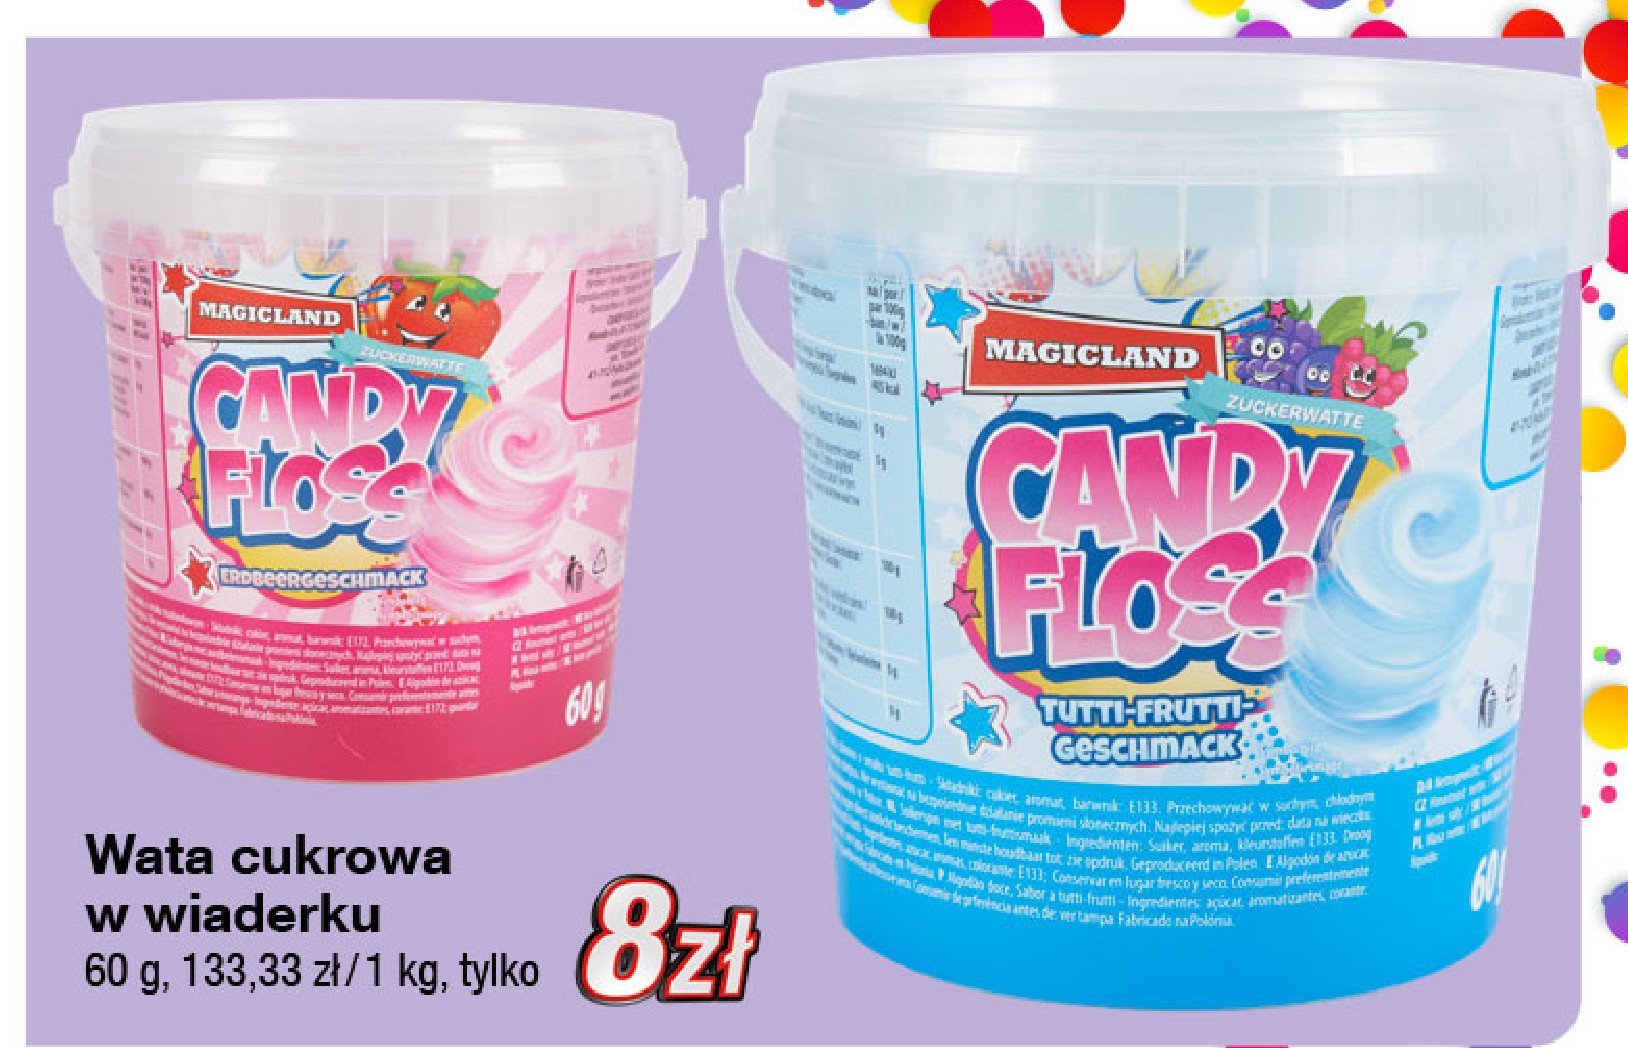 Wata cukrowa tutti-frutti Candy floss promocja